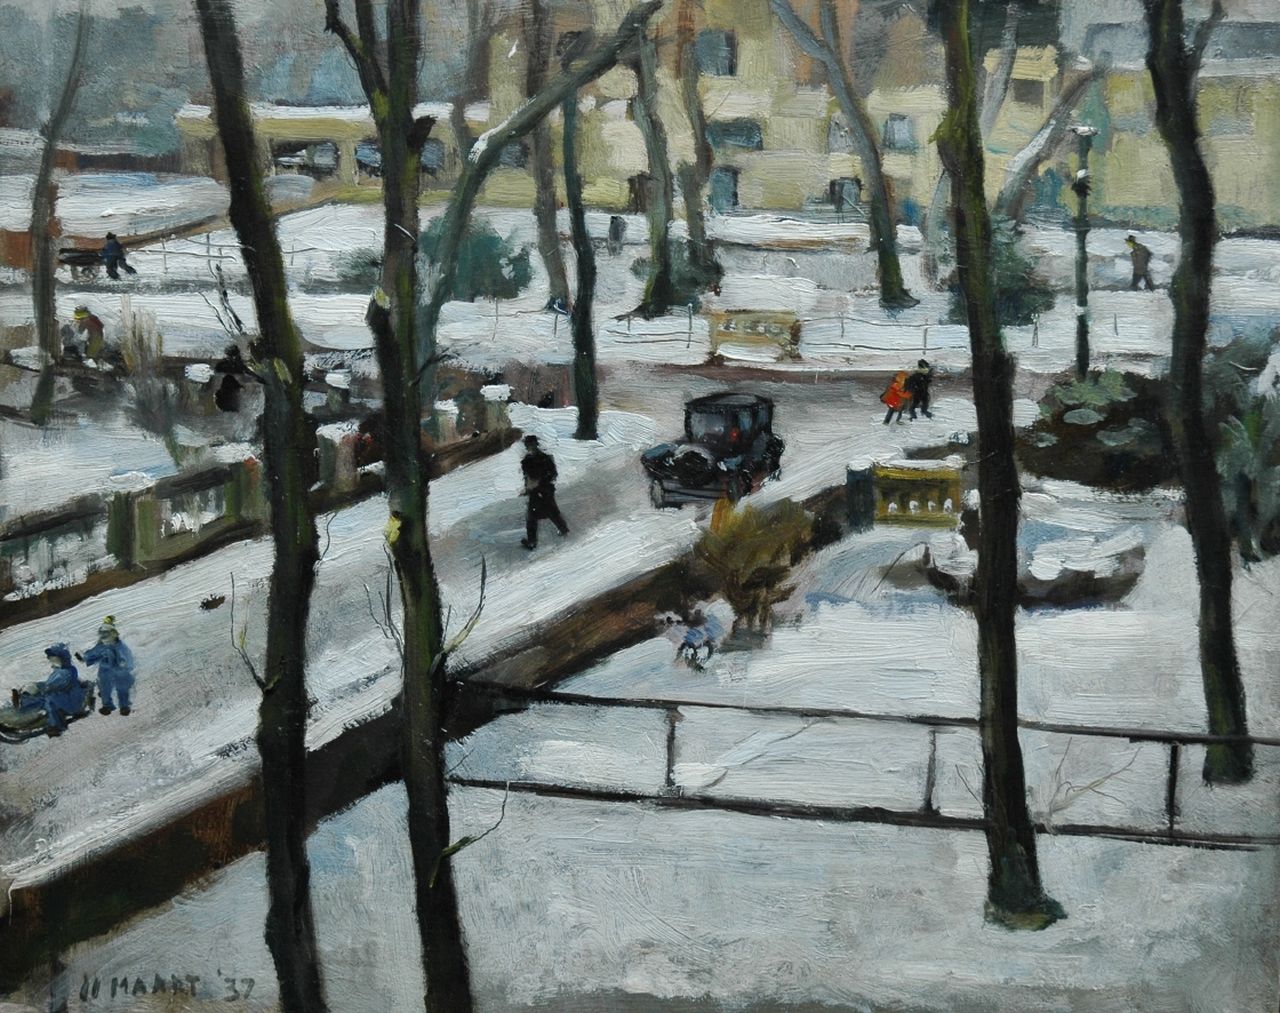 Arntzenius E.C.  | Elise Claudine Arntzenius, A view of The Hague in winter, with the Municipal Museum in the distance, Öl auf Holz 32,4 x 40,2 cm, dated 11 maart '37